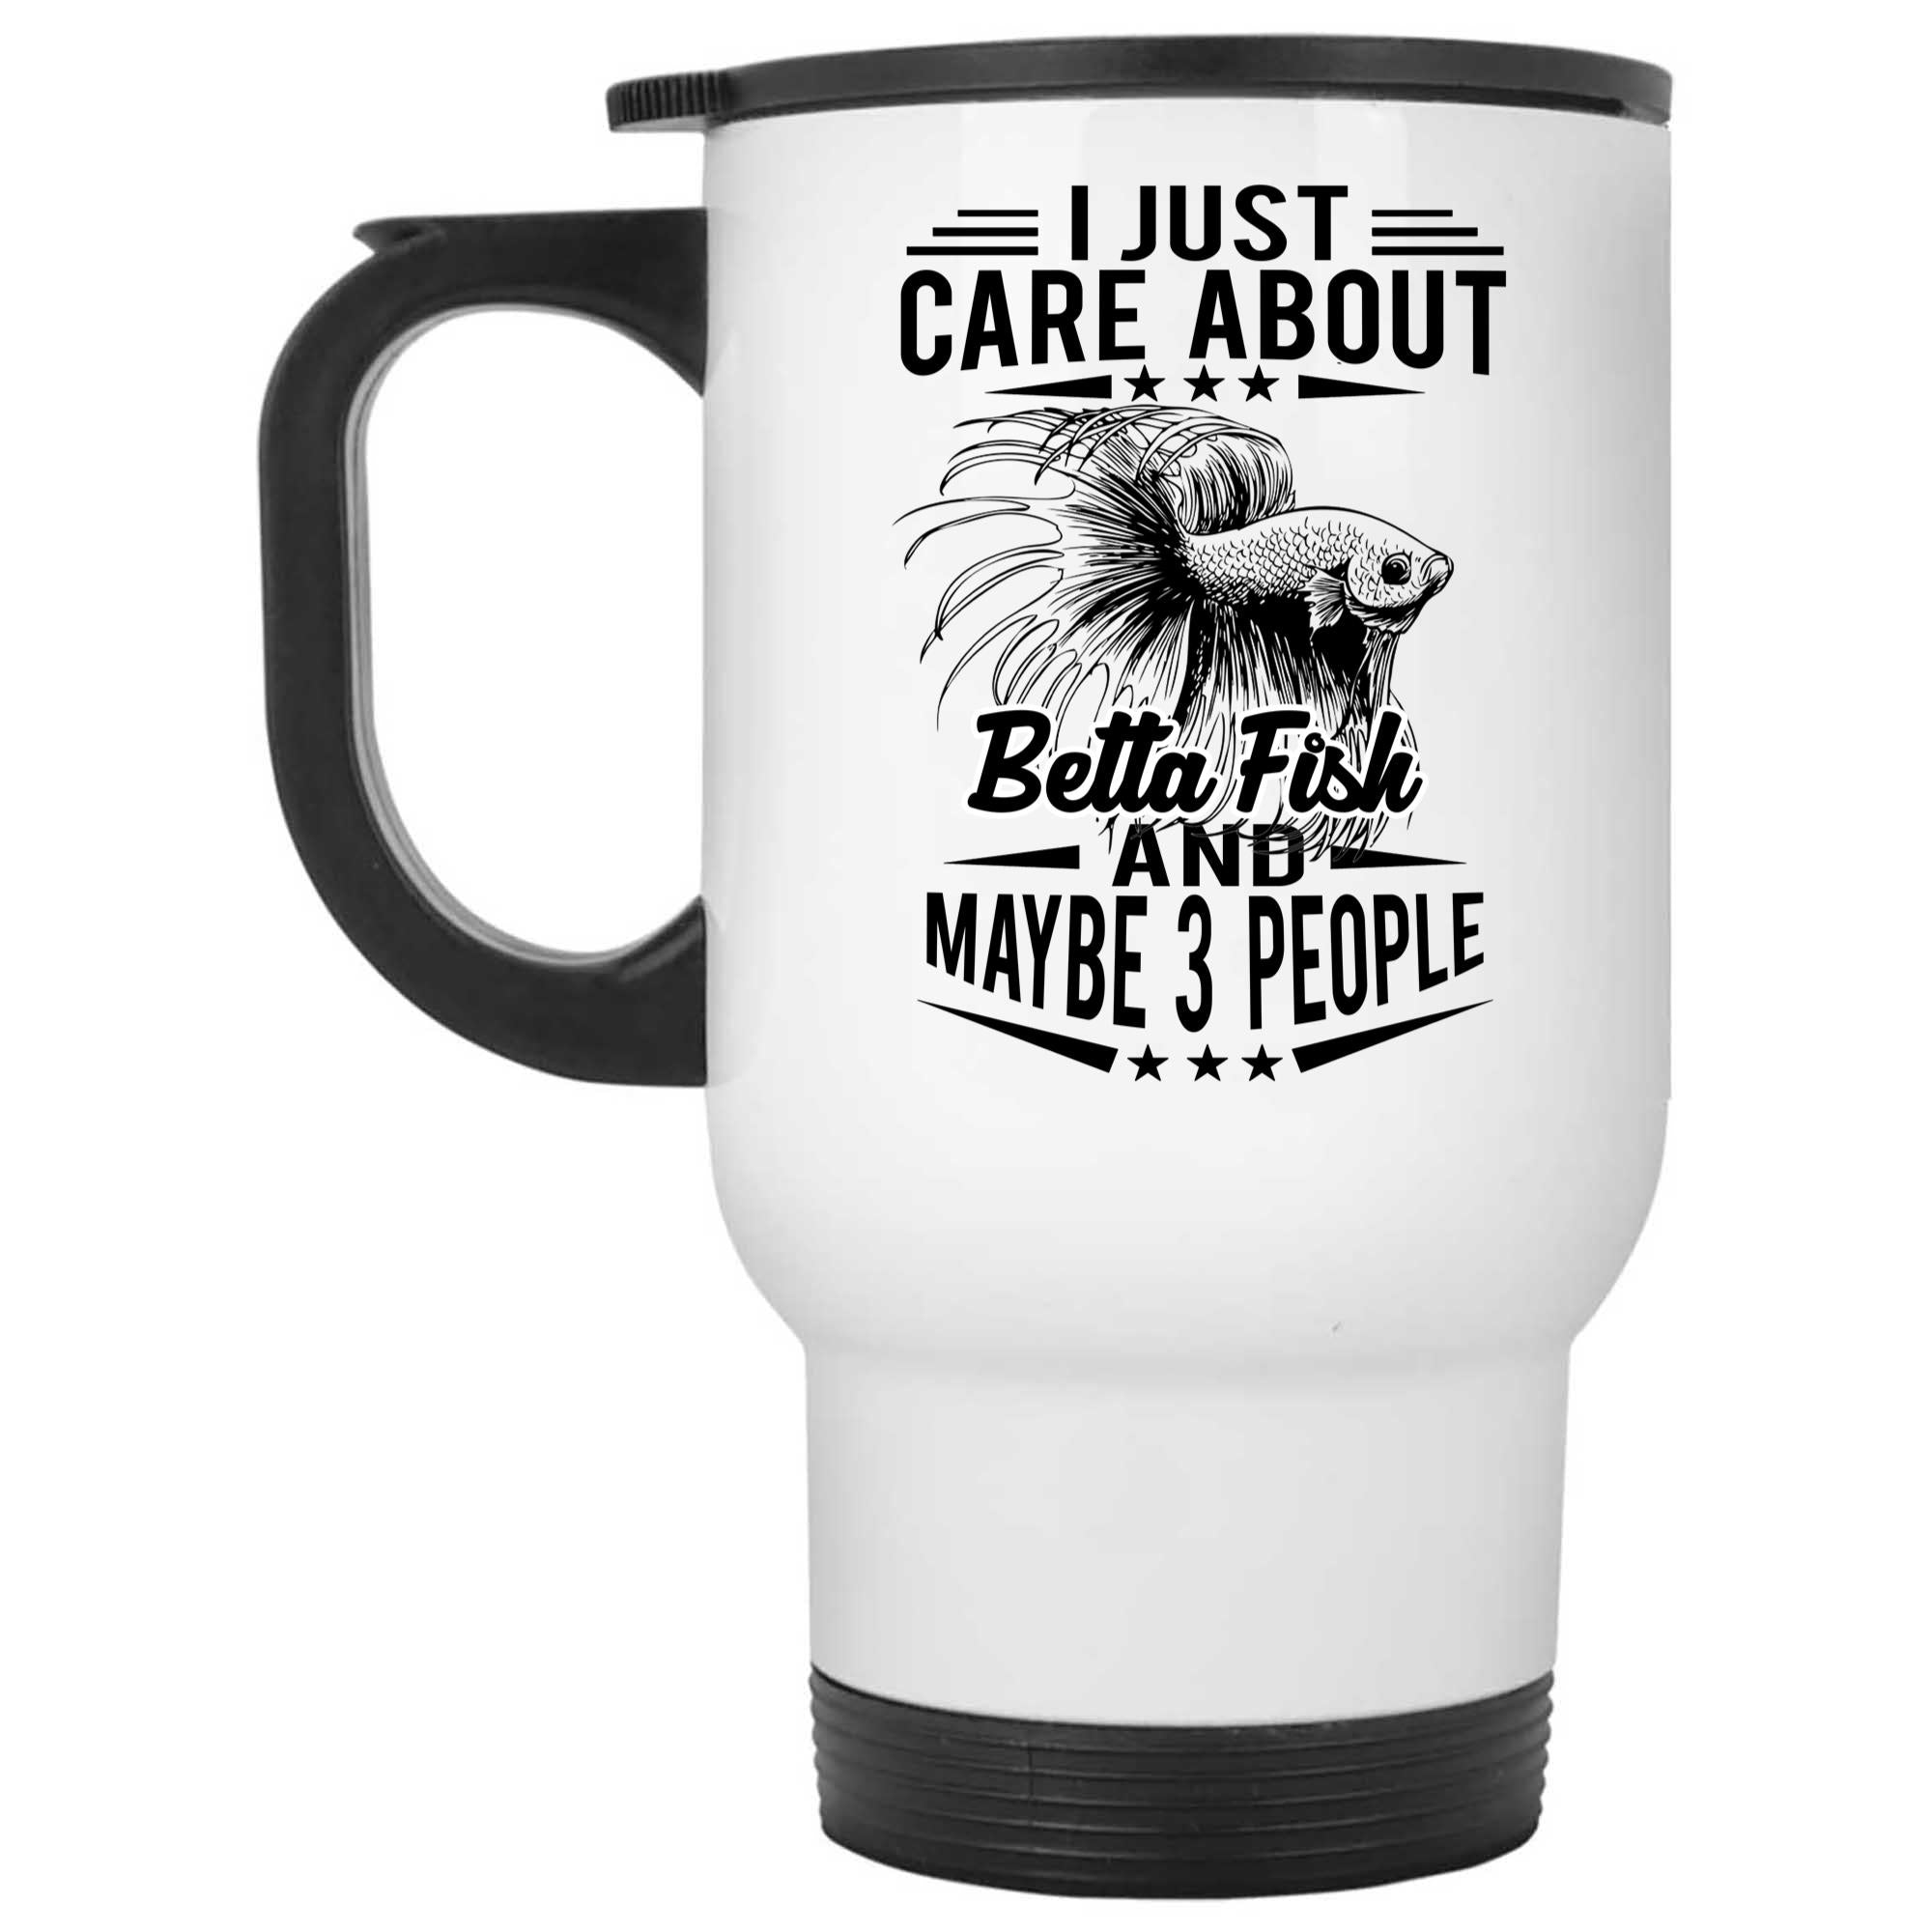 Skitongifts Coffee Mug Funny Ceramic Novelty I Just Care About Betta Fish SYH2FoZ